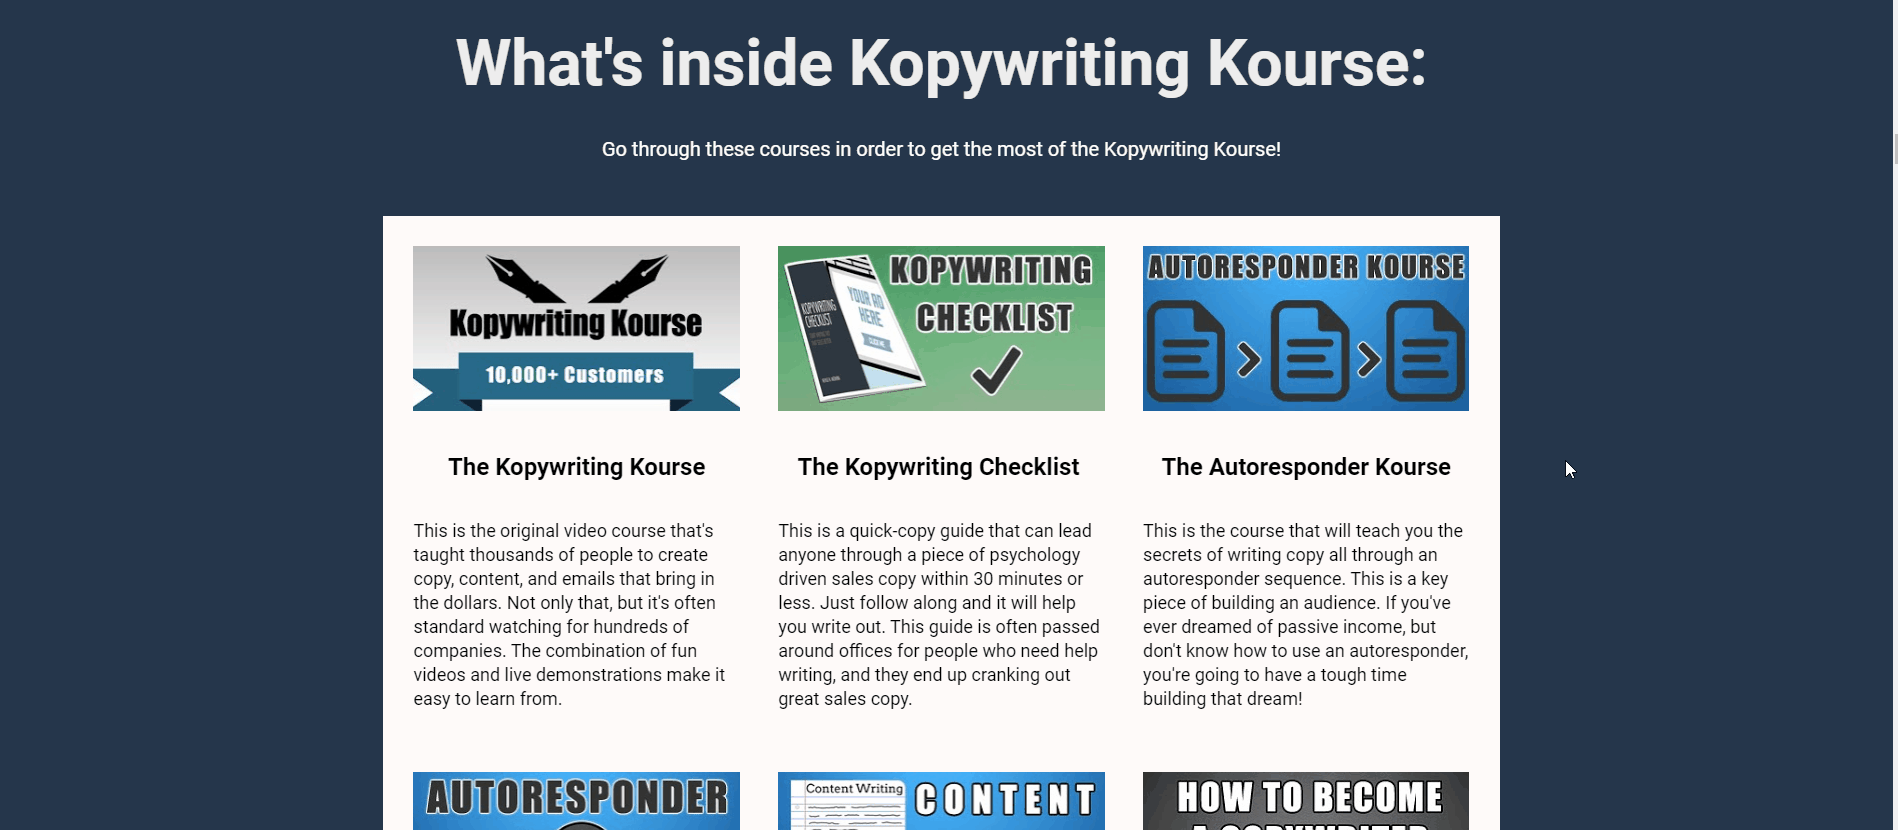 KopywritingKourse courses